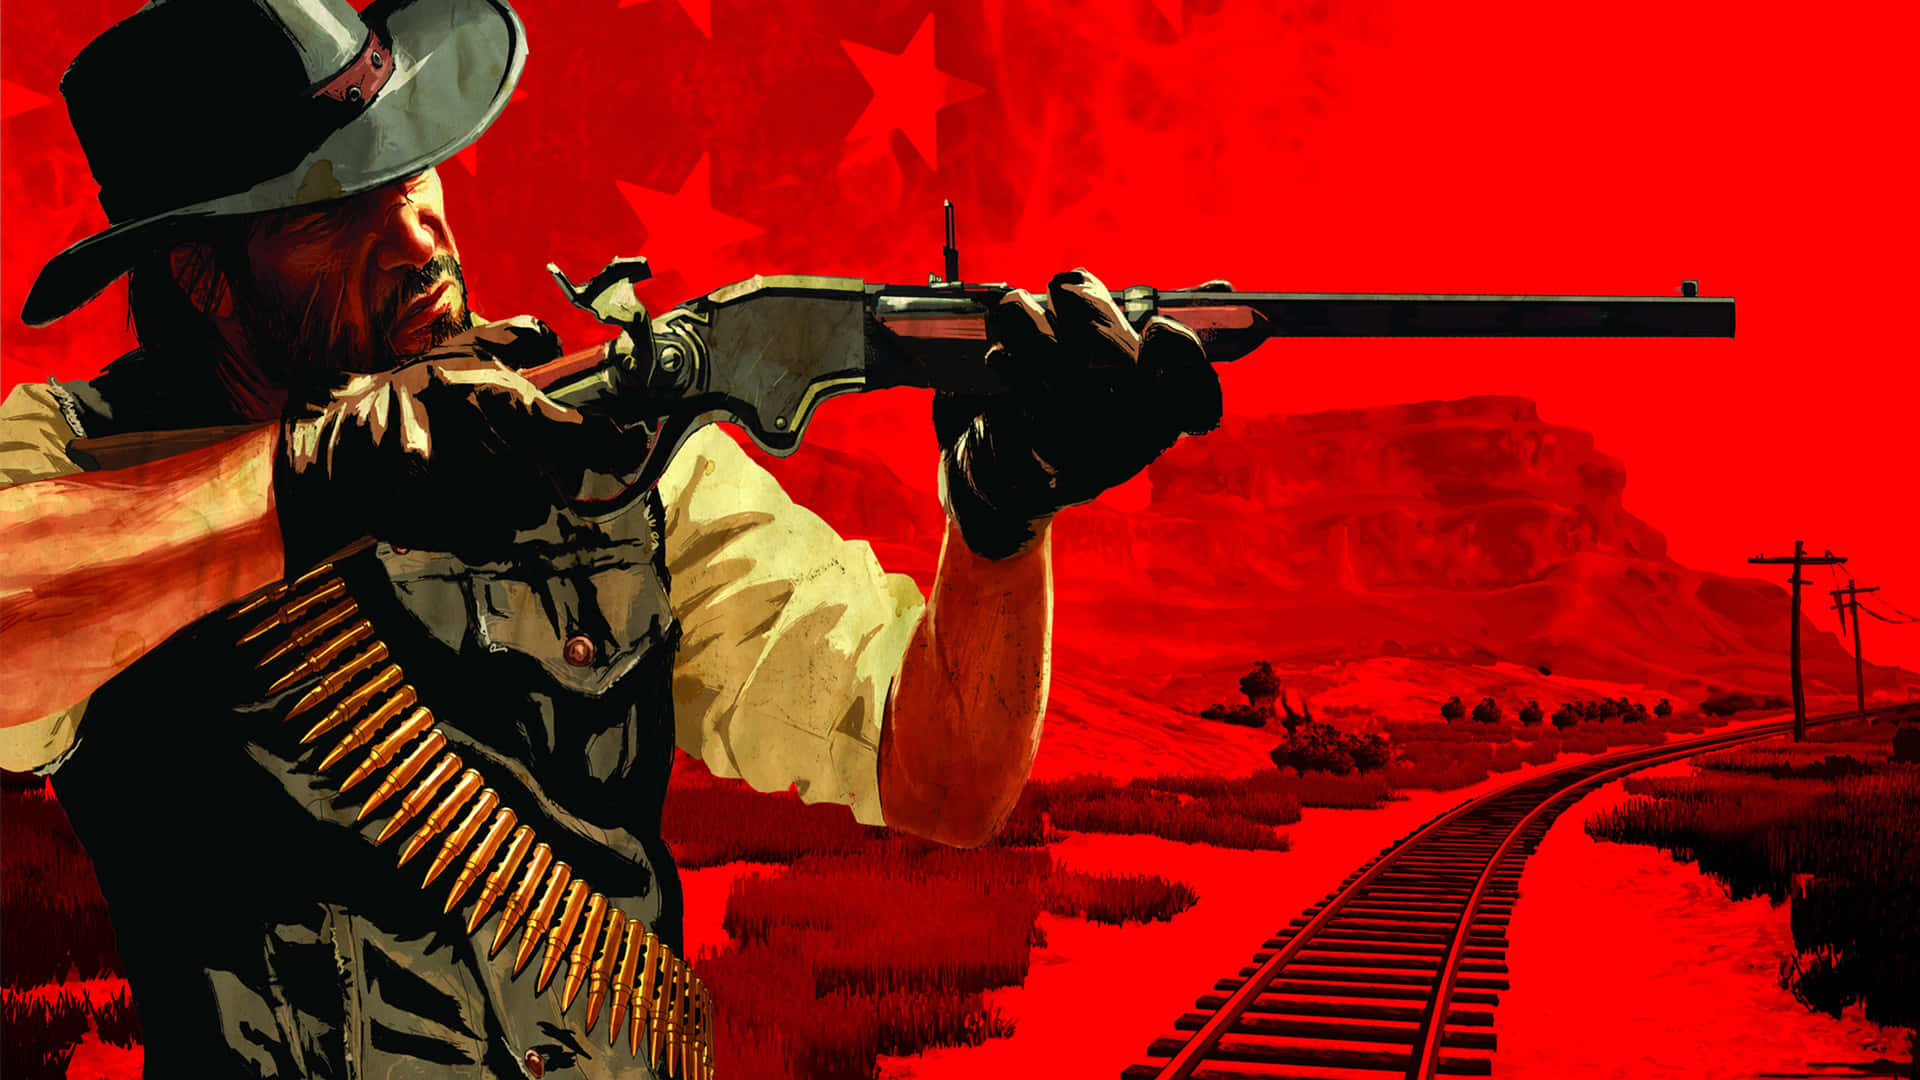 Migliorsfondo Red Dead Redemption 2 Arthur Morgan Prendendo La Mira Con Un Fucile.